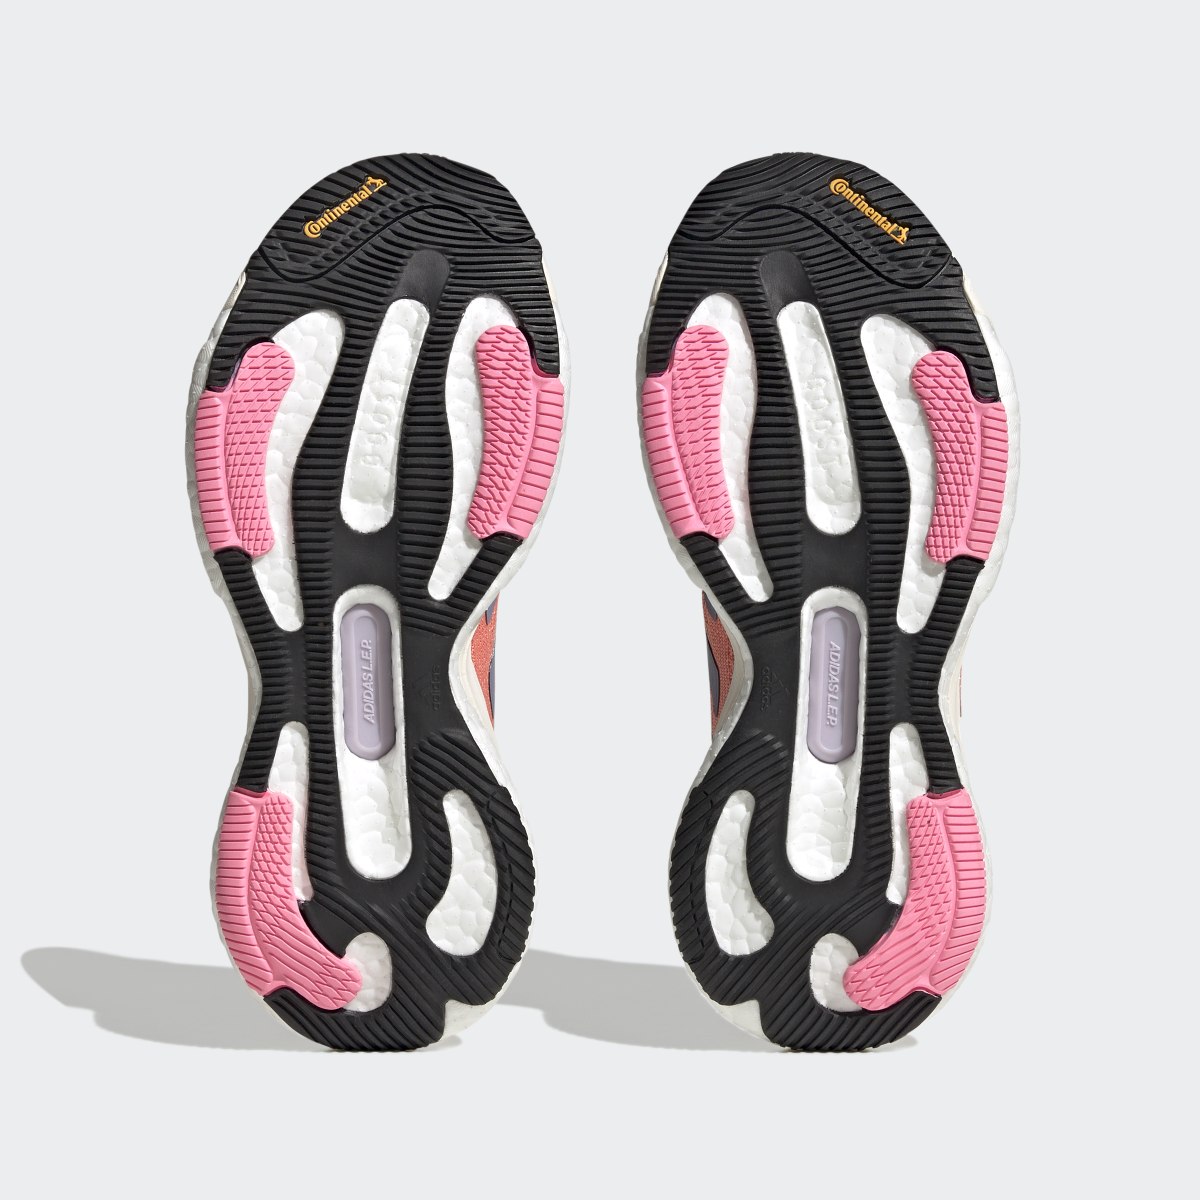 Adidas SOLARGLIDE 6 Ayakkabı. 4